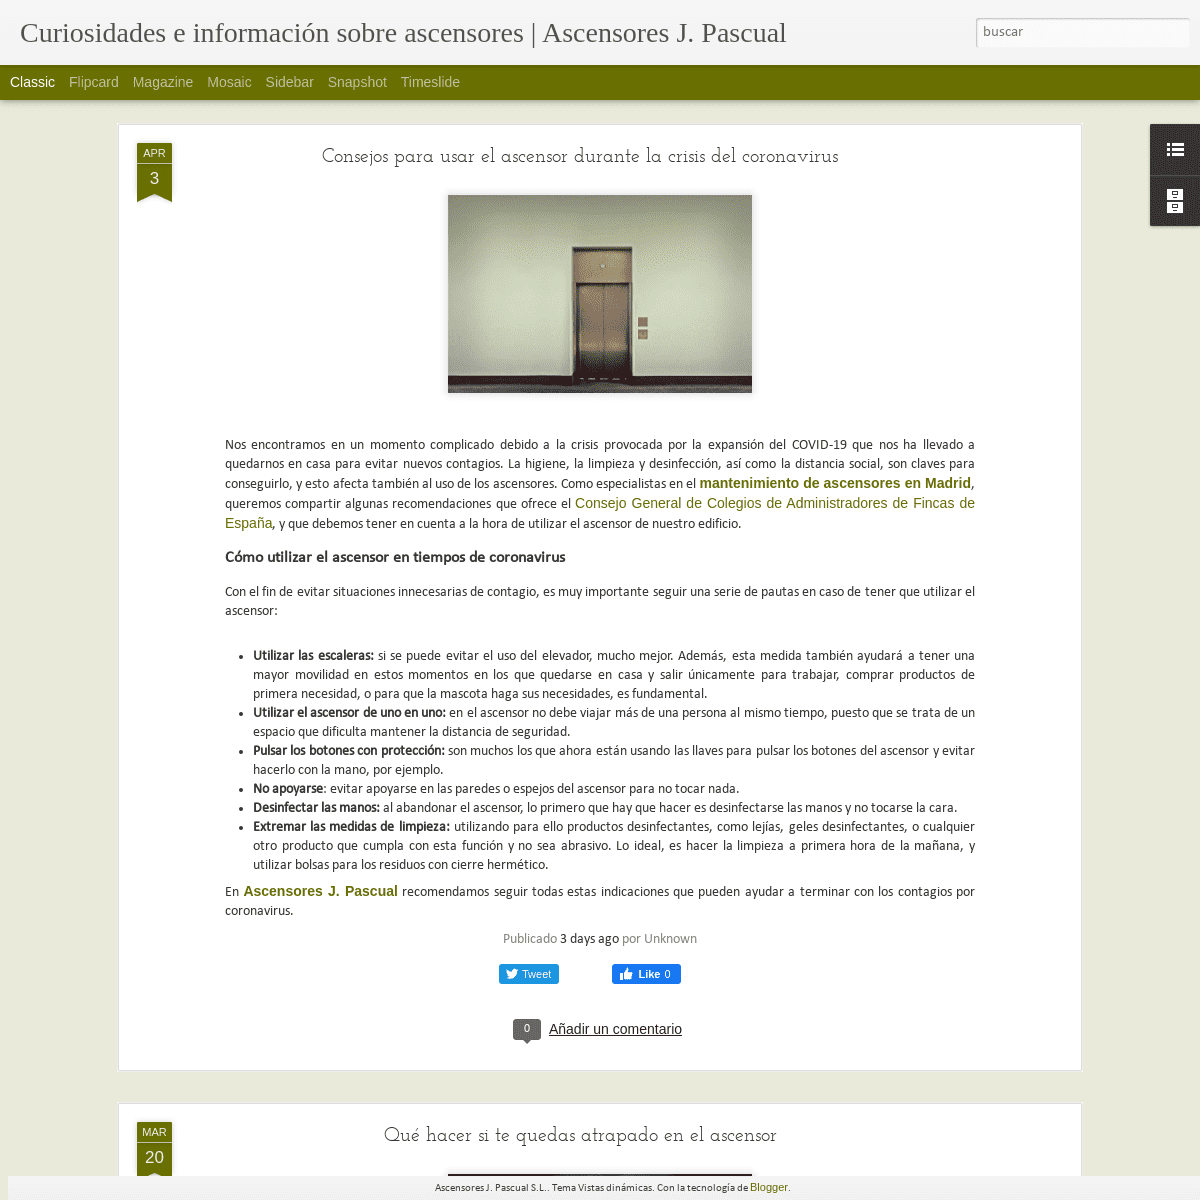 A complete backup of ascensoresjpascual.blogspot.com